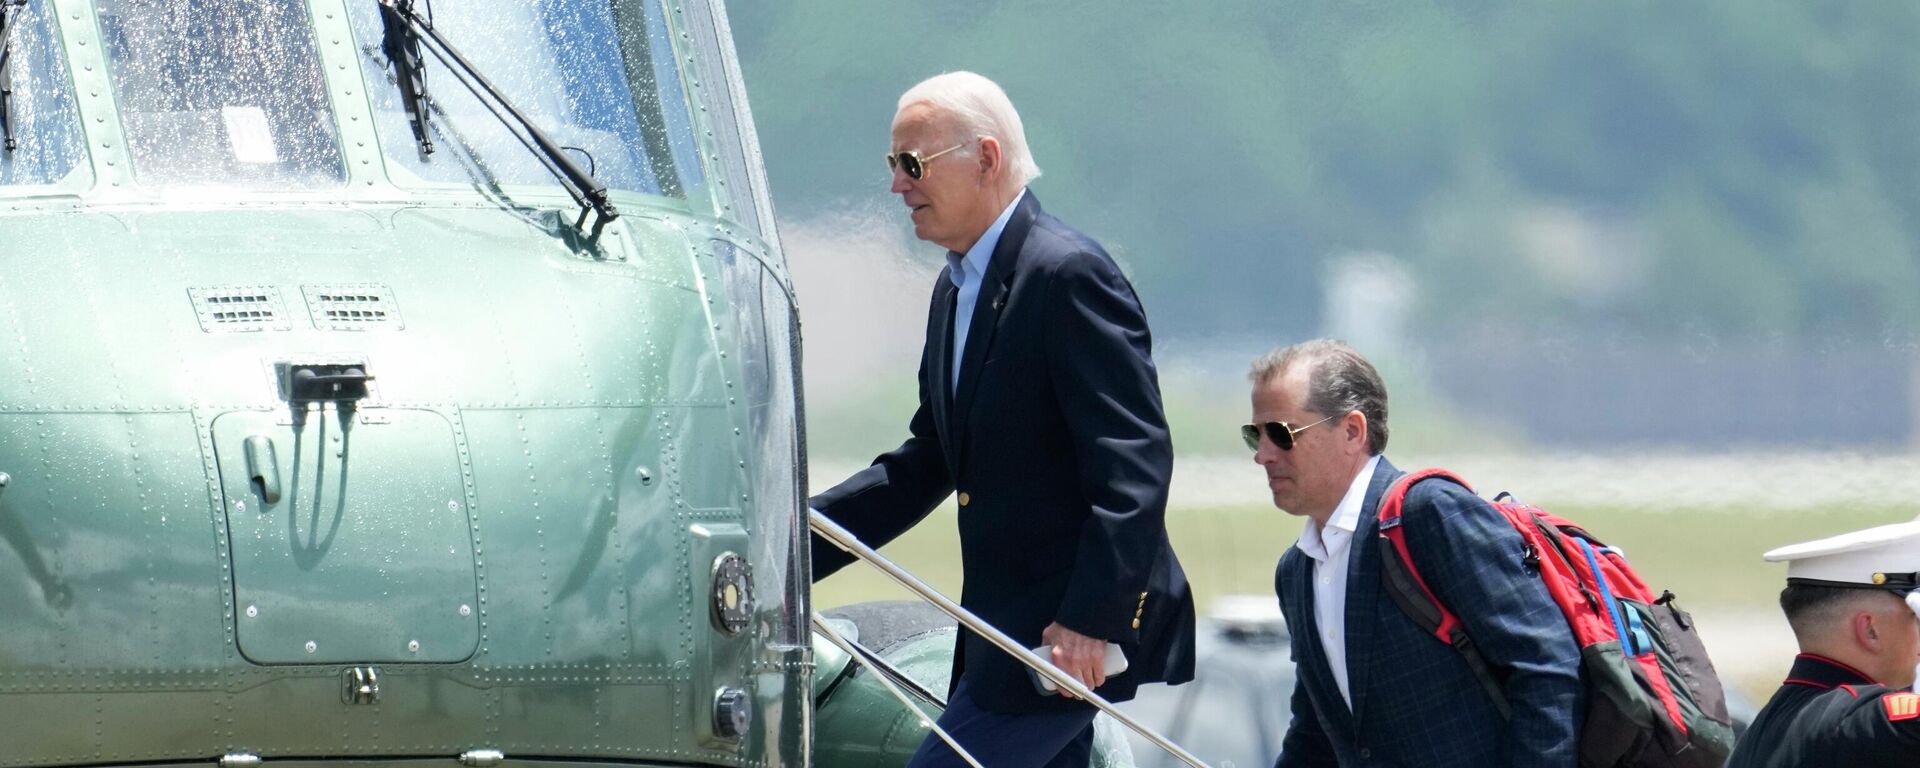 President Joe Biden boards Marine One with his son Hunter Biden as he leaves Andrews Air Force Base, Md., on his way to Camp David, Saturday, June 24, 2023 - Sputnik International, 1920, 15.09.2023